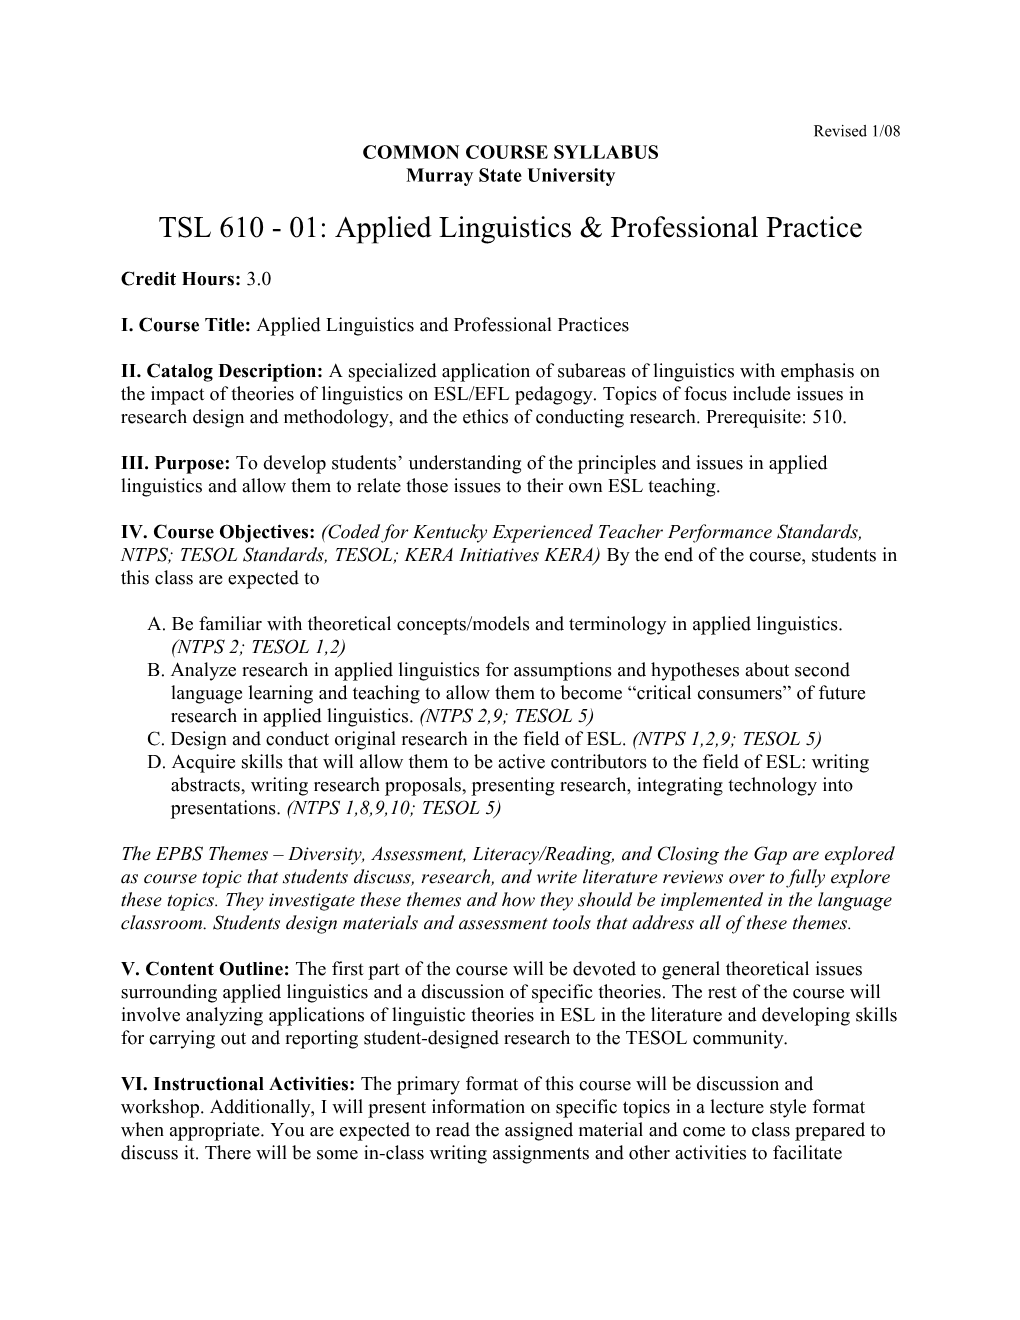 TSL 610 - 01: Applied Linguistics & Professional Practice